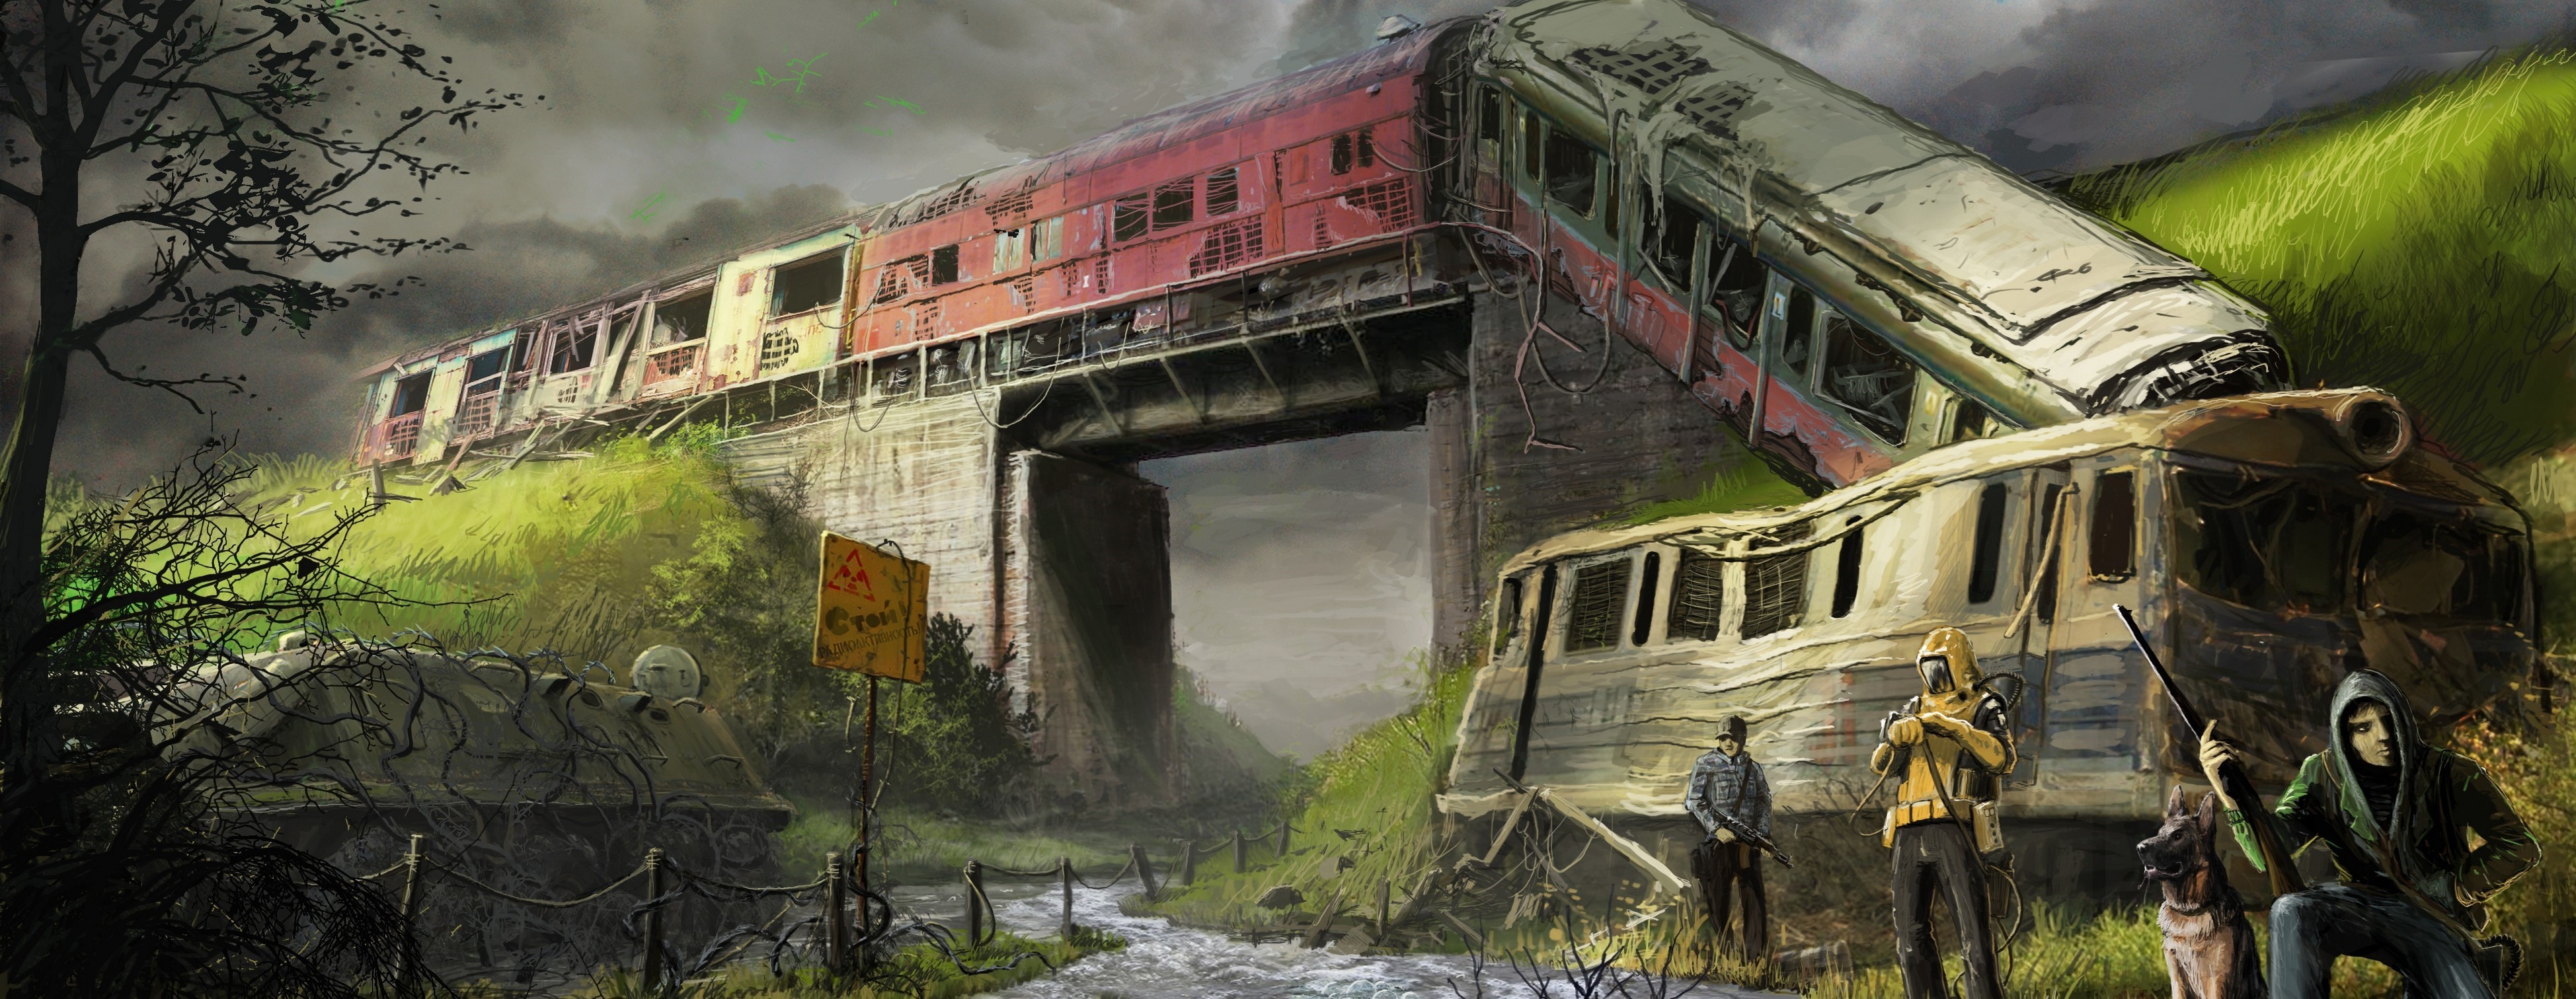 General 3897x1512 artwork apocalyptic train vehicle wreck futuristic